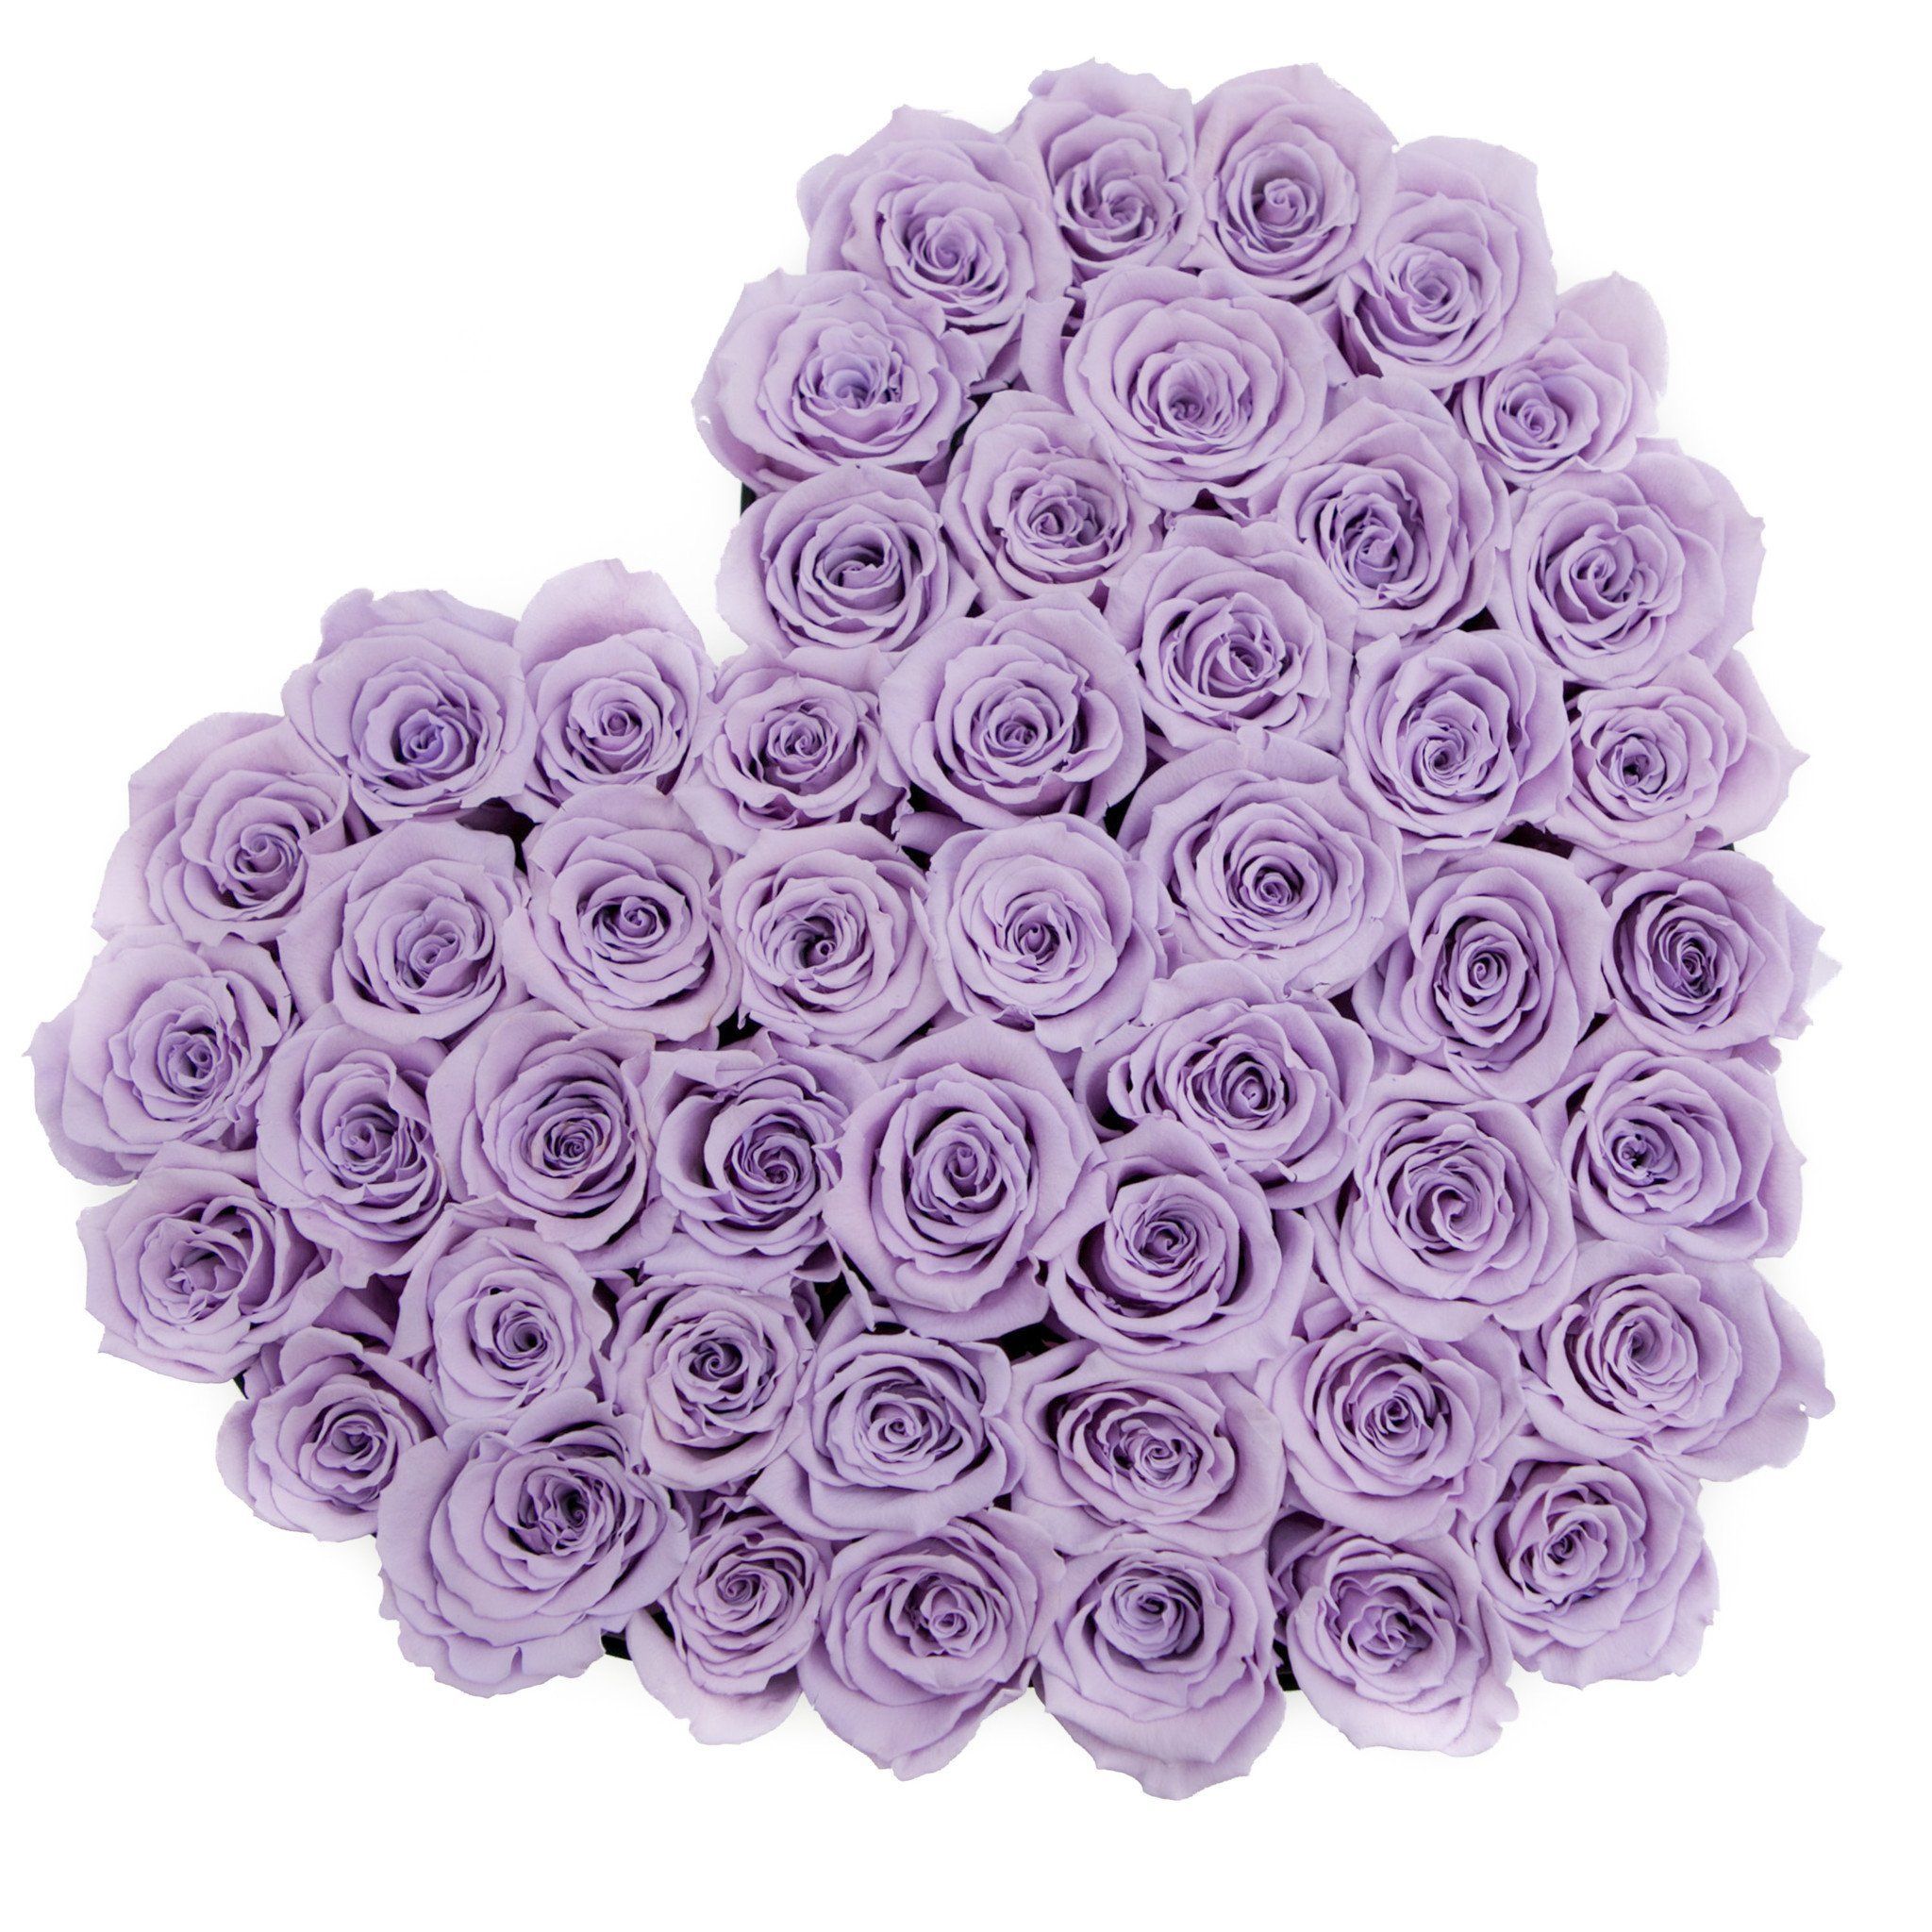 LOVE box - black - lavender roses lavender eternity roses - the million roses